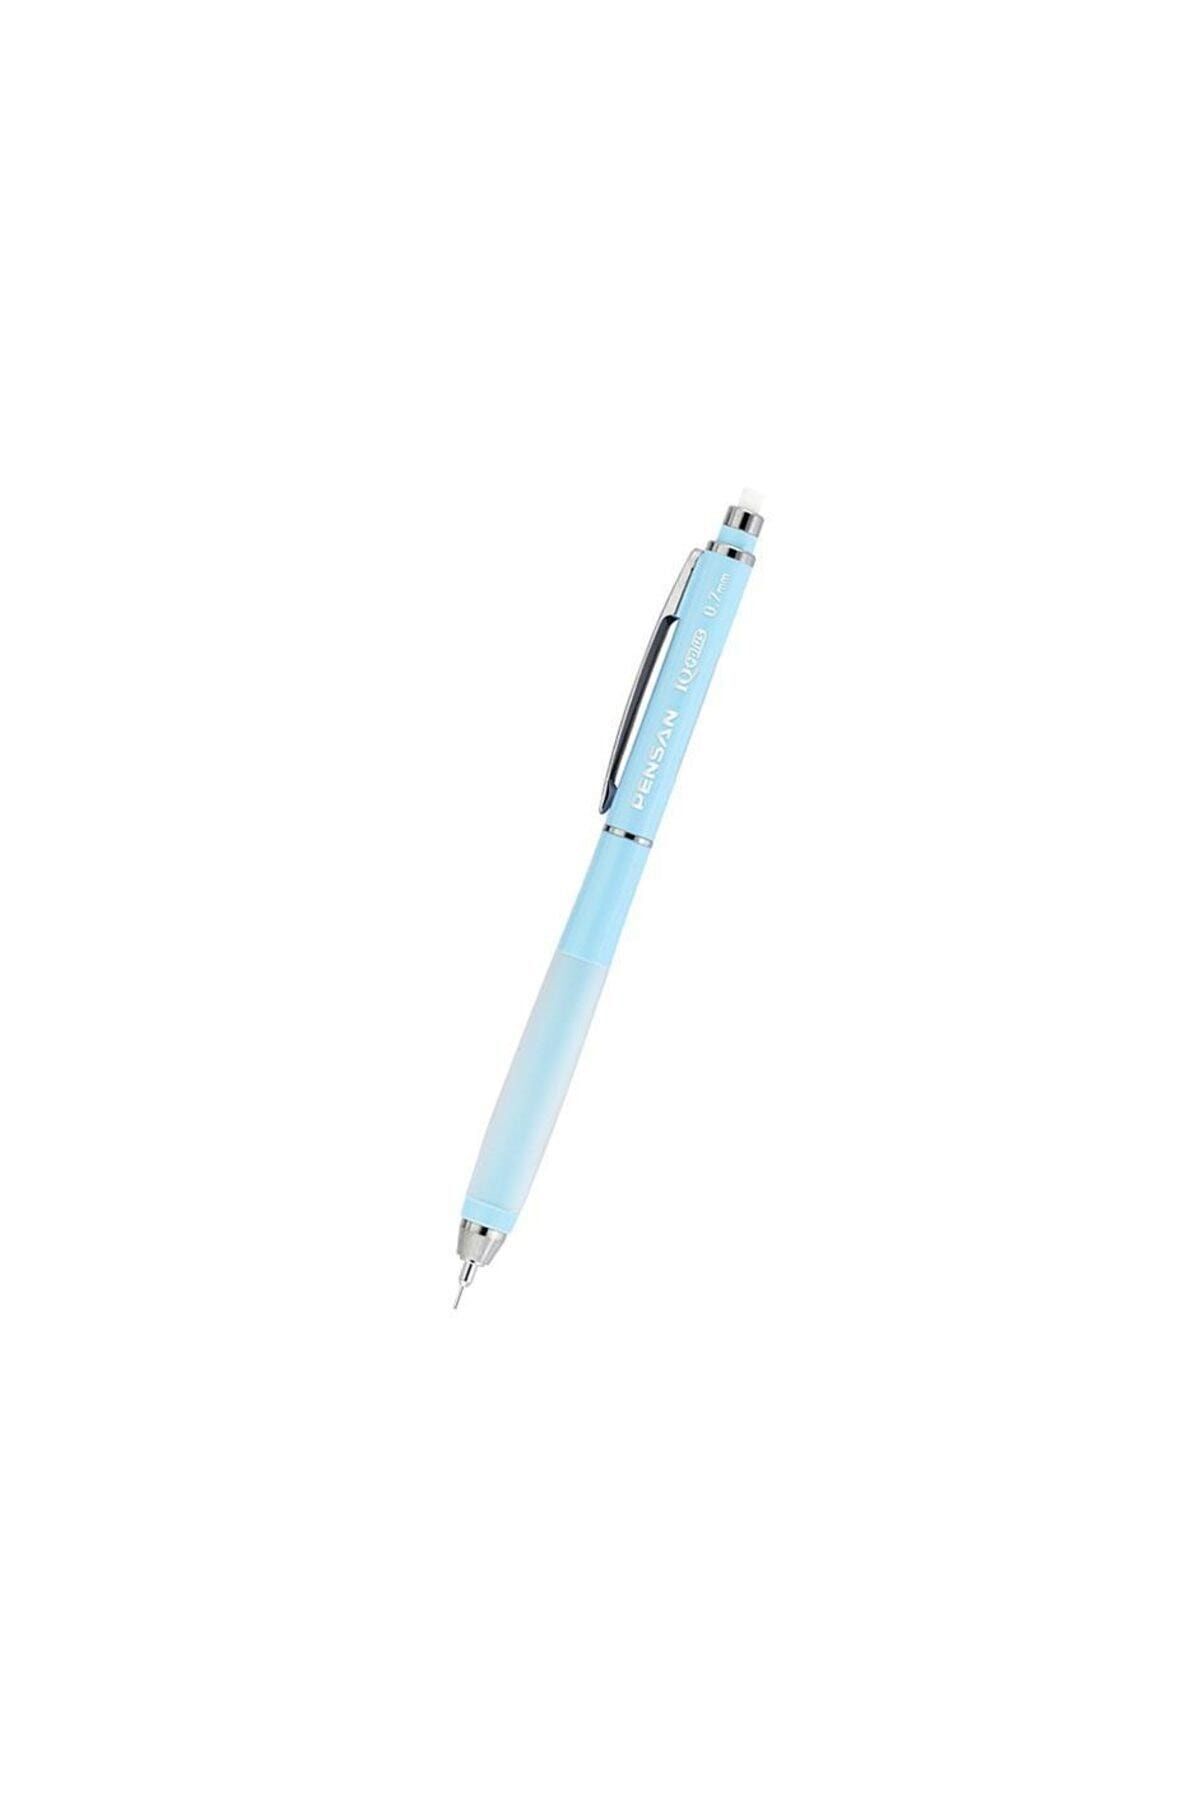 Pensan Iq Plus Versatil Kalem - 0.7 Mm Pastel Mavi Renk Uçlu Kalem